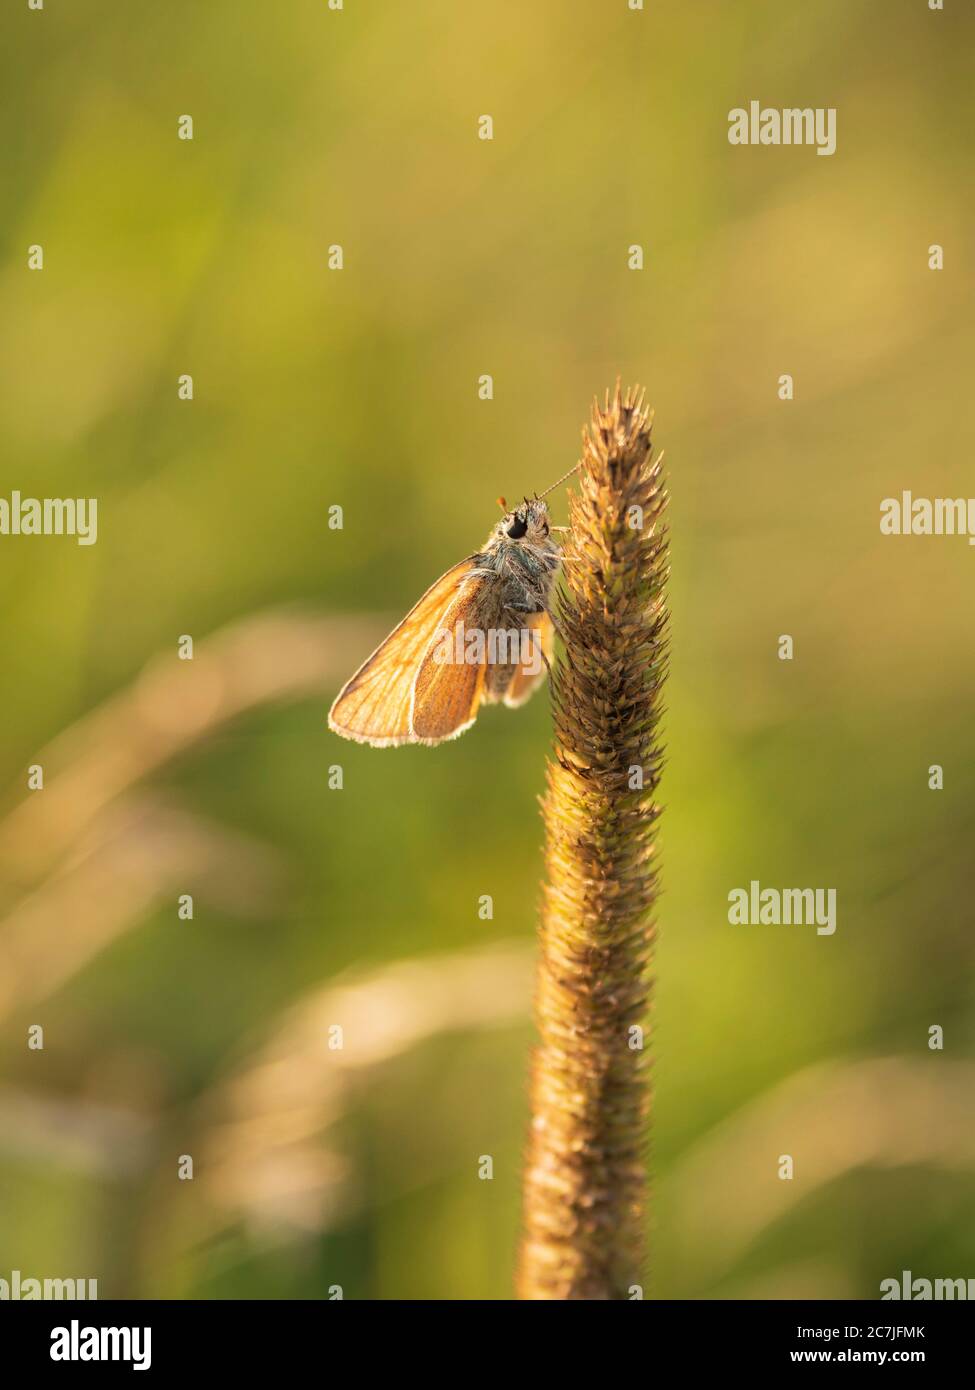 Insects on grass, Großer Filz / Klosterfilz, National Park, Bavarian Forest, Bavaria, Germany Stock Photo